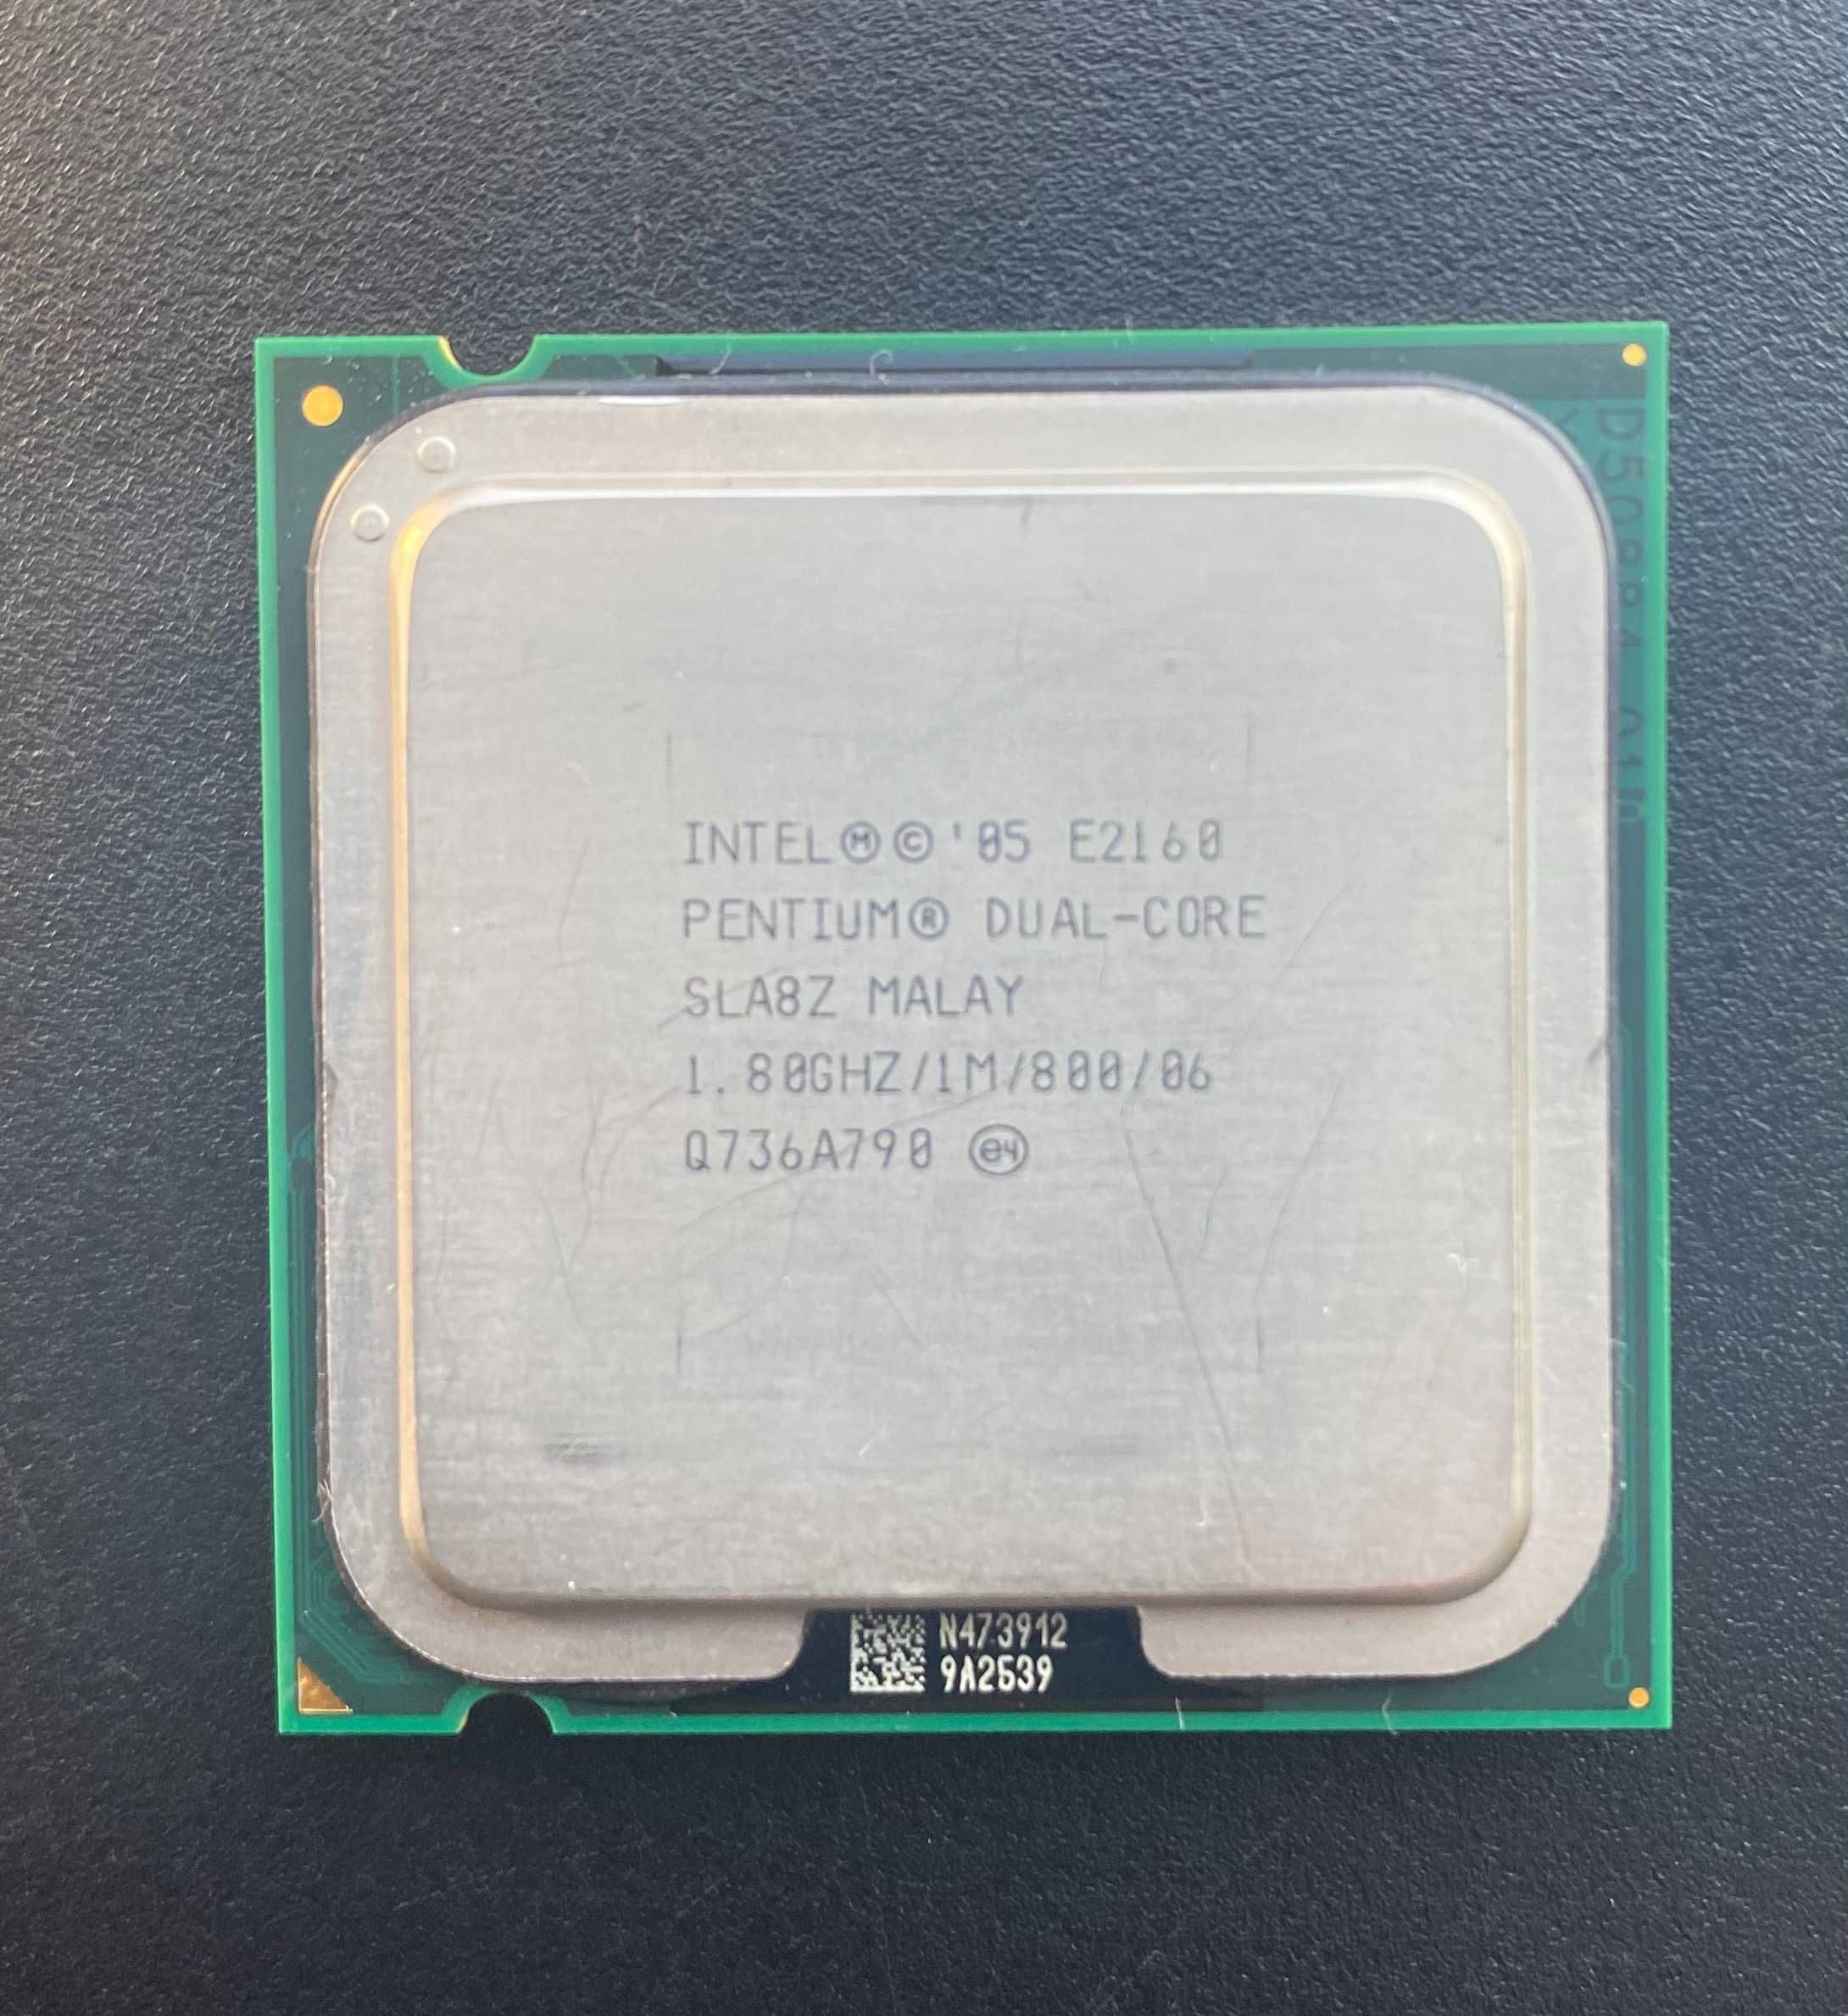 Процессори Intel Pentium DUAL-CORE, Celeron D, 430 на 775 socket